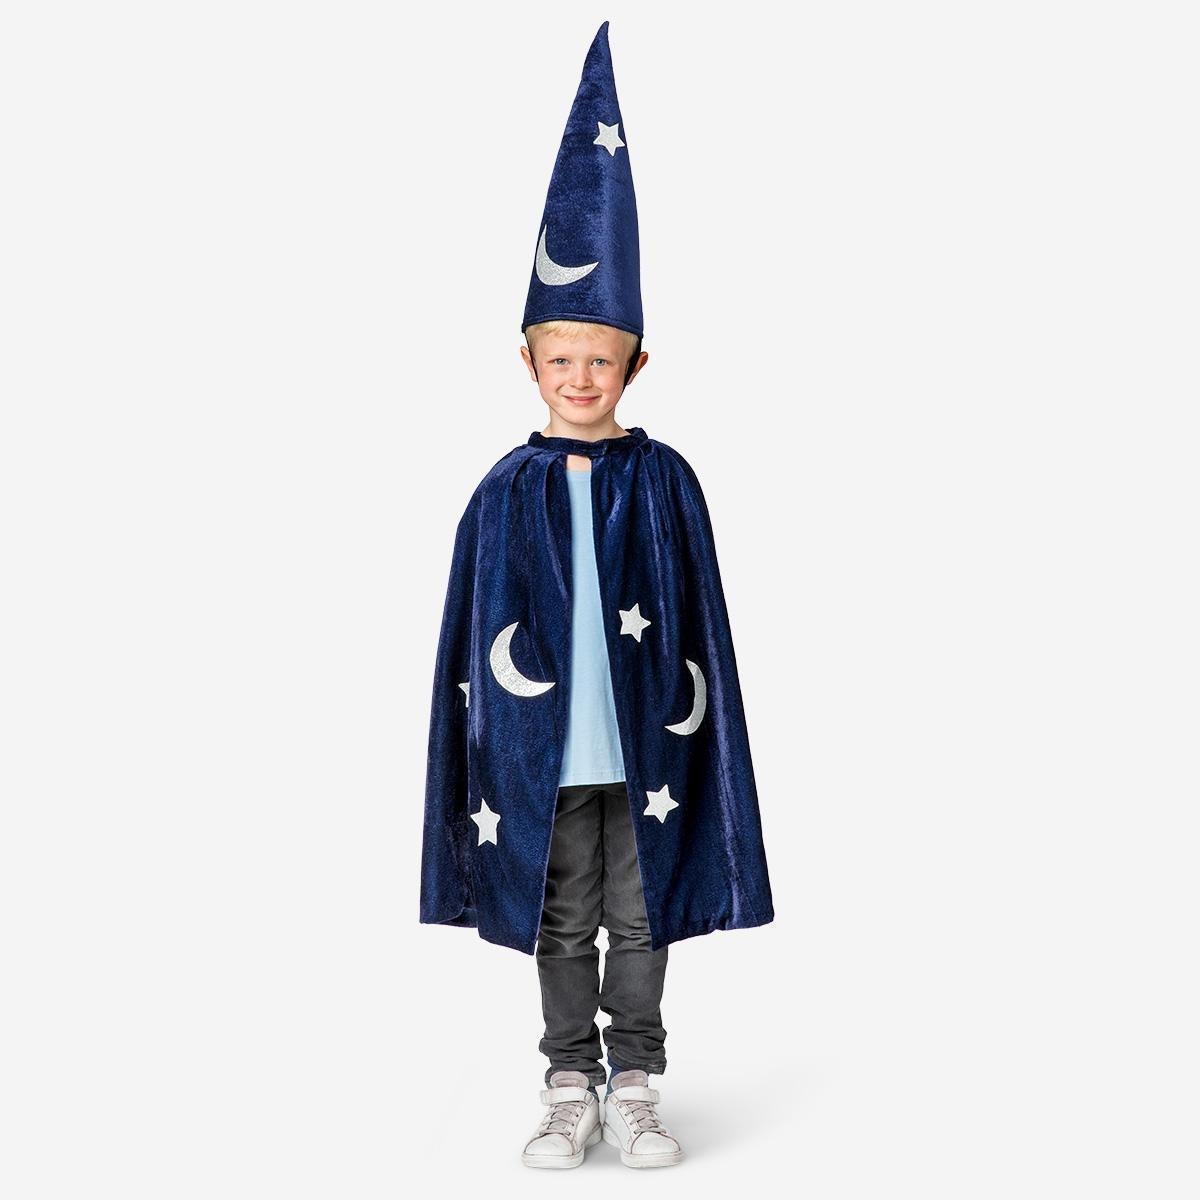 Blue wizard costume. 4-8 years